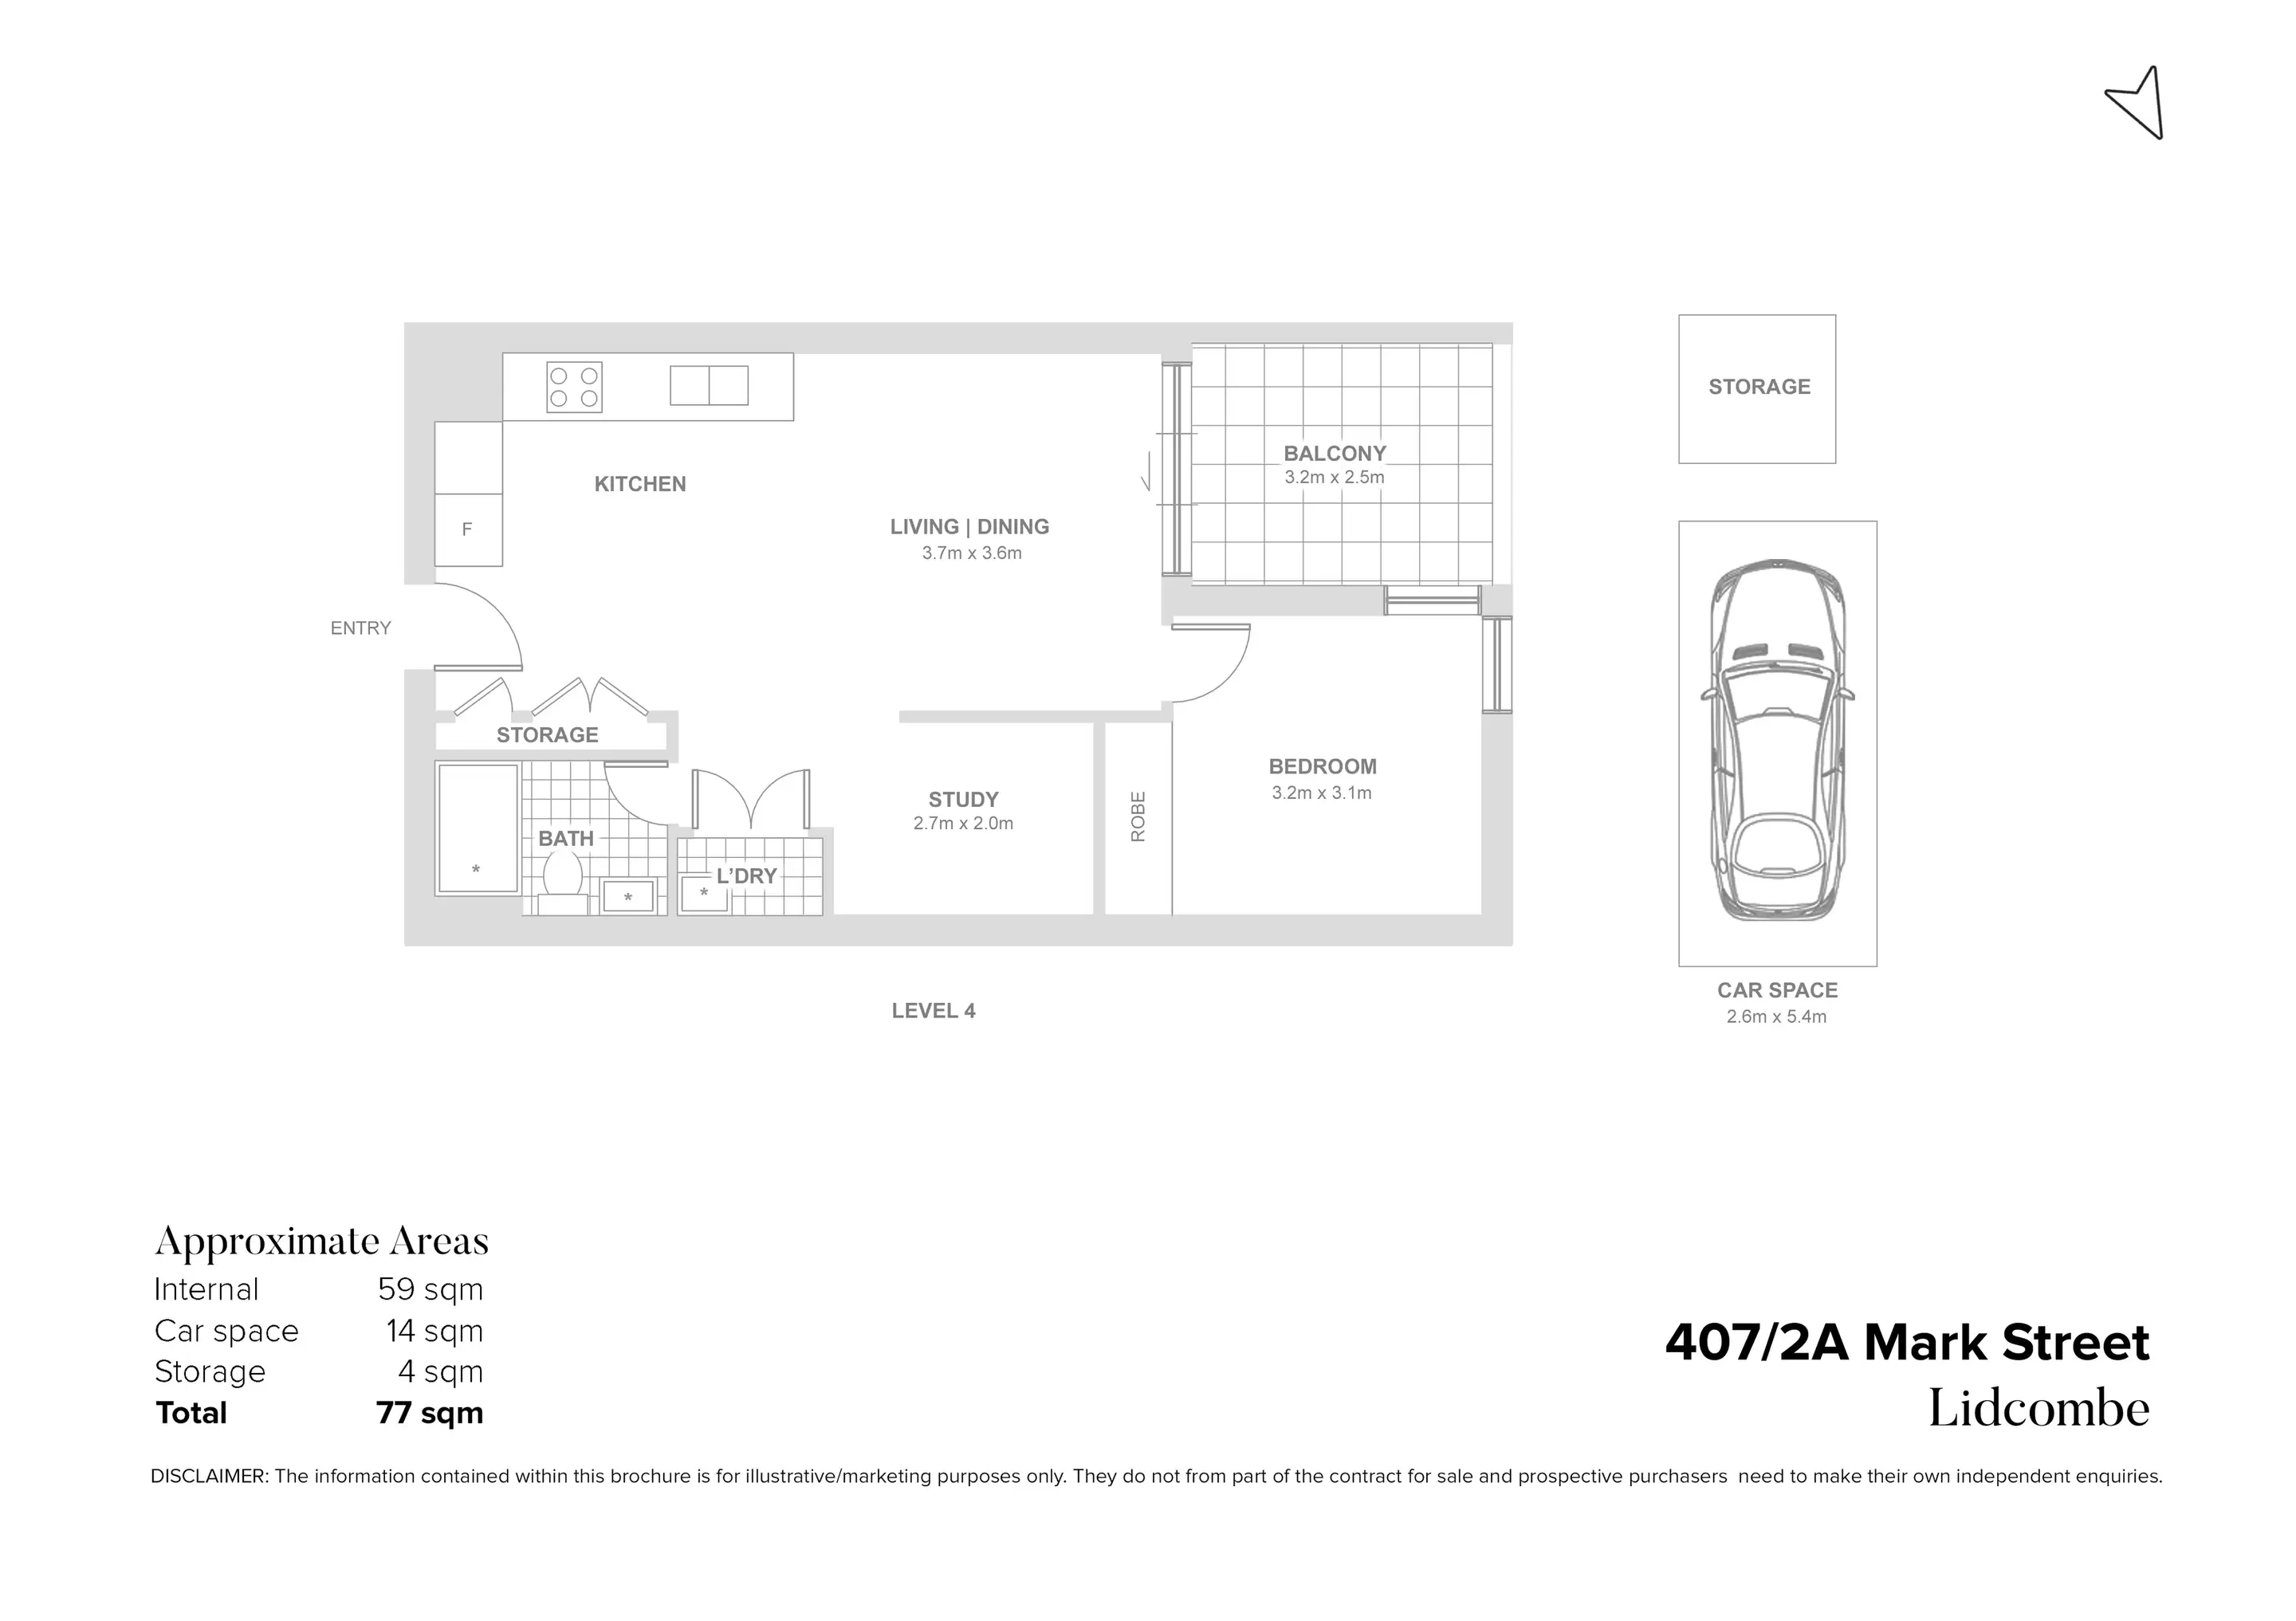 407/2A Mark Street, Lidcombe Sold by Chidiac Realty - floorplan